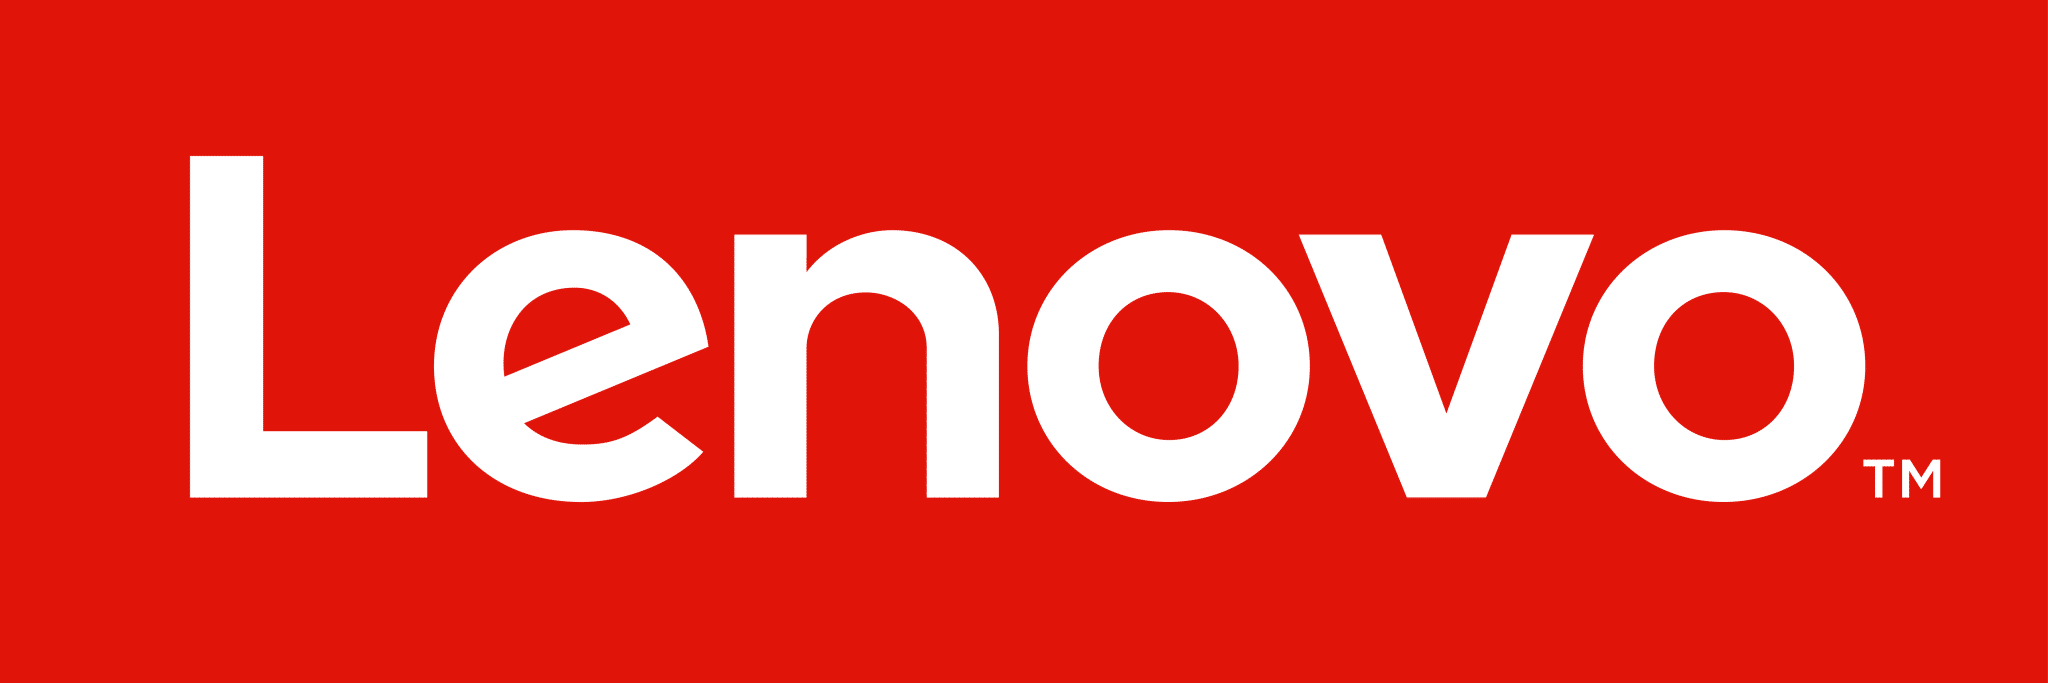 lenovo corporate logo